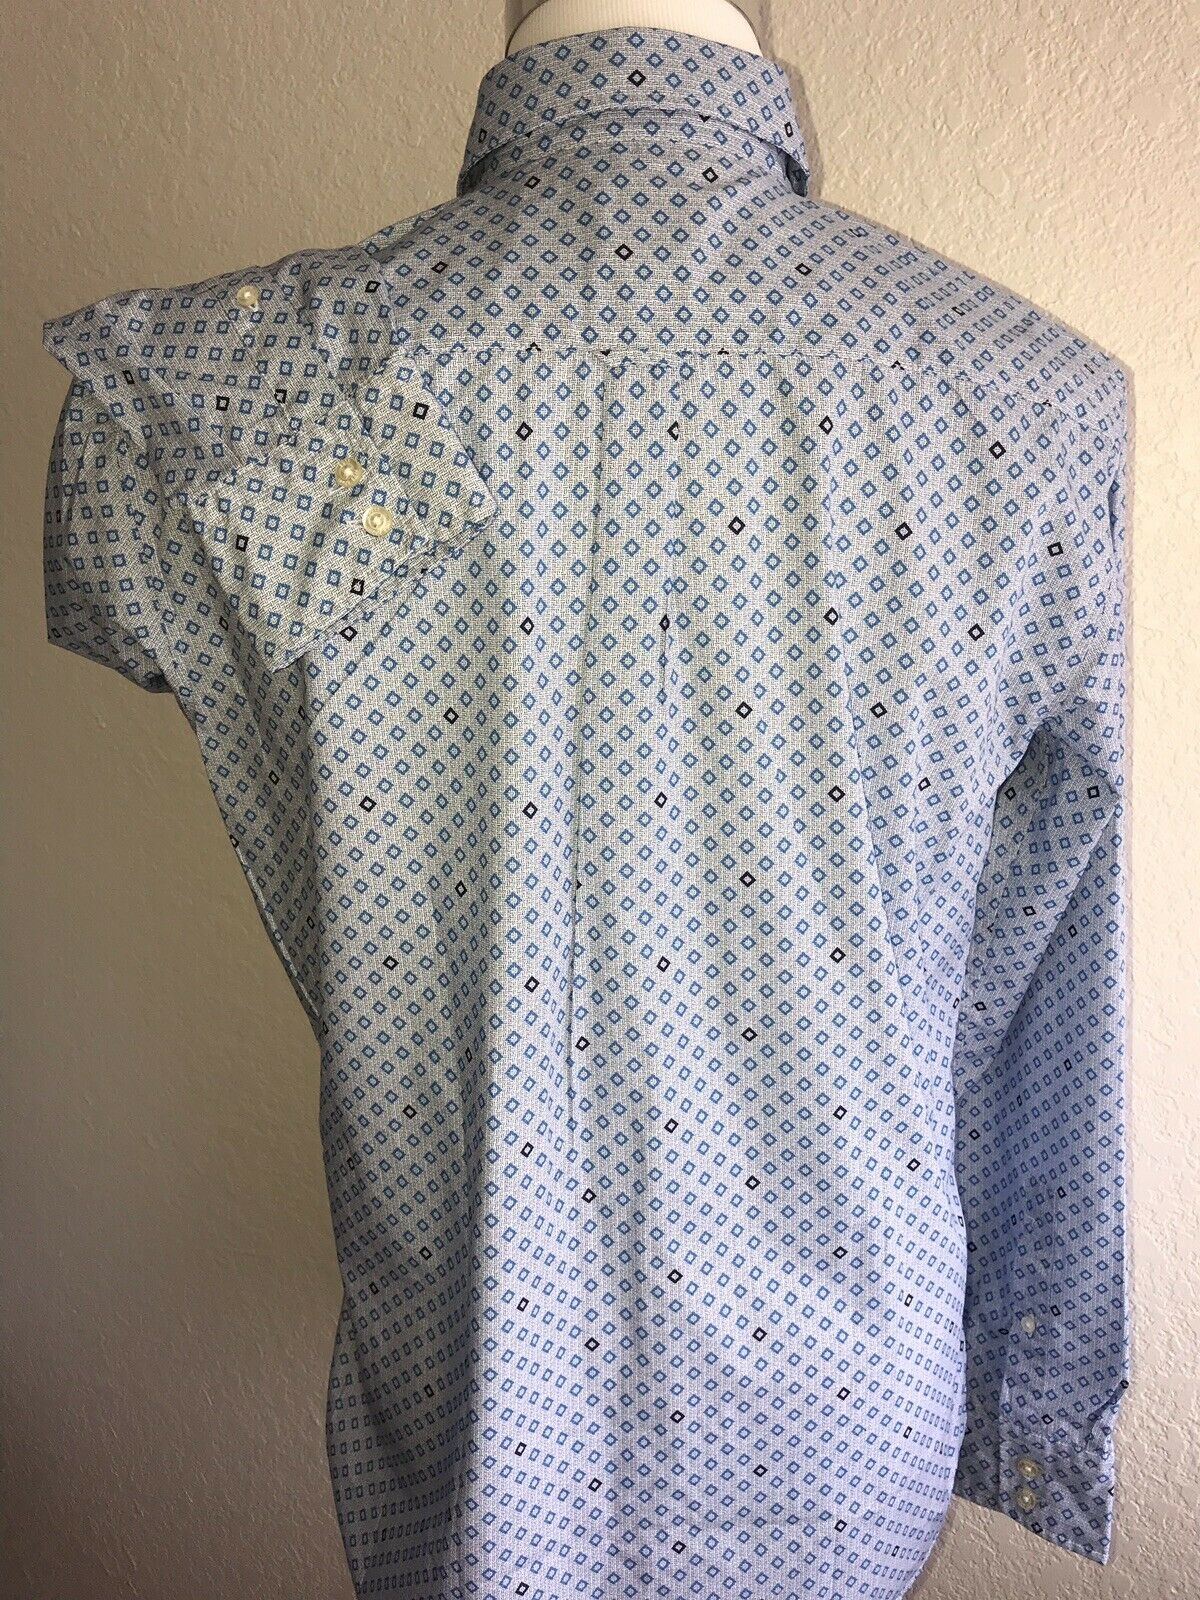 NWT $128 Hugo Boss Mabsoot Men's Slim Fit Cotton Blue Dress Shirt Size 2XL